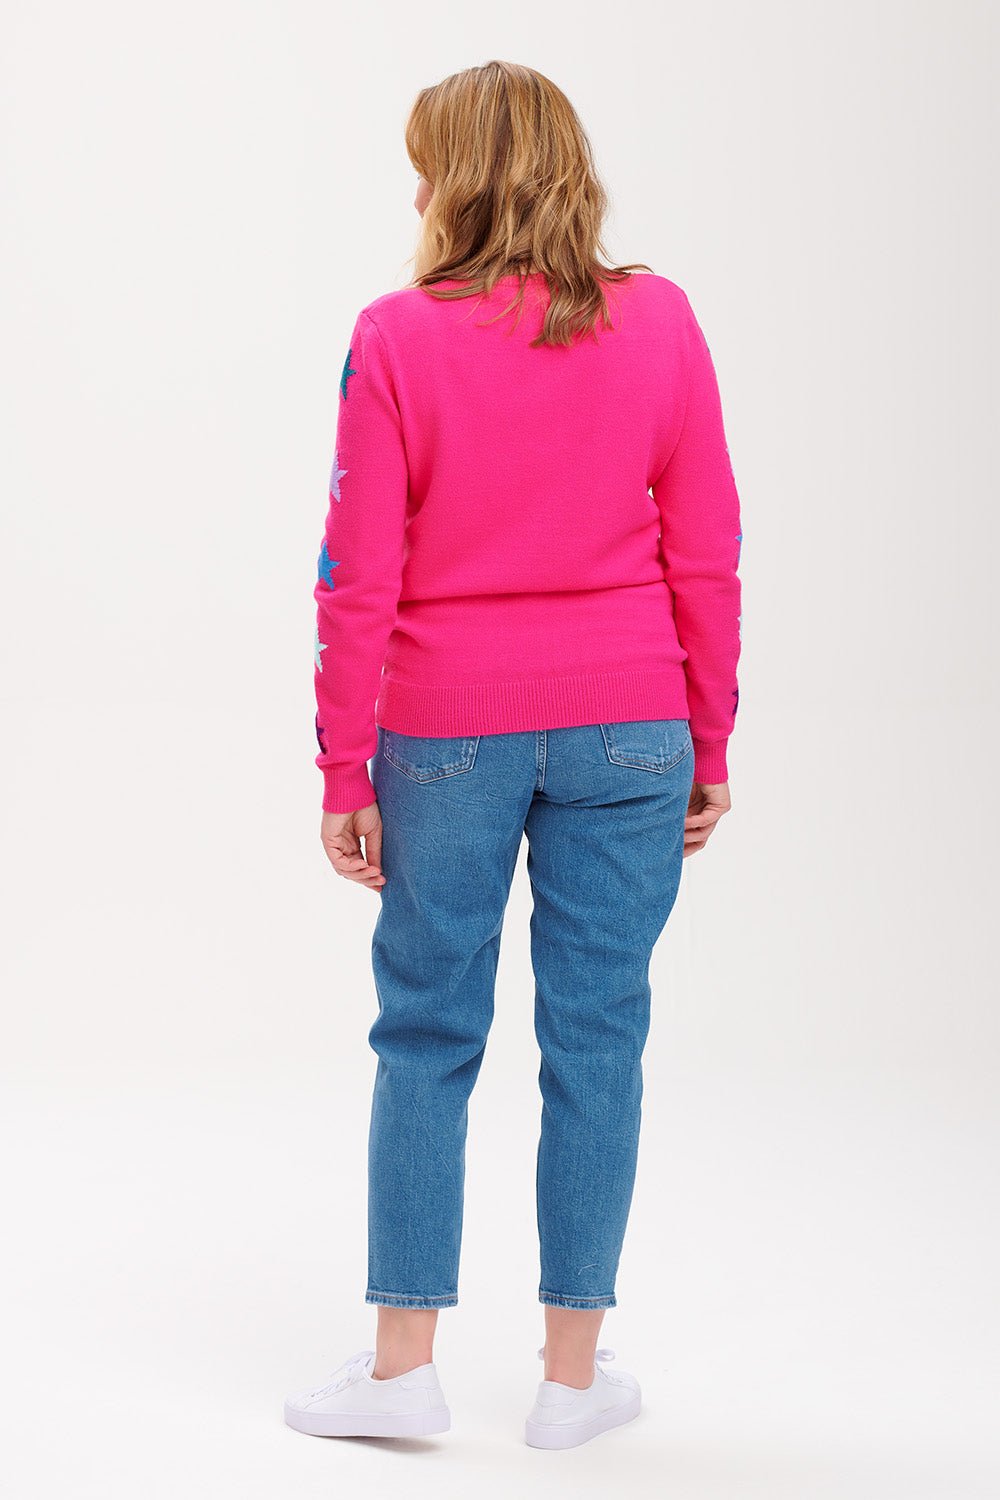 Stacey Jumper - Pink Star Sleeve - Rockamilly-Knitwear-Vintage